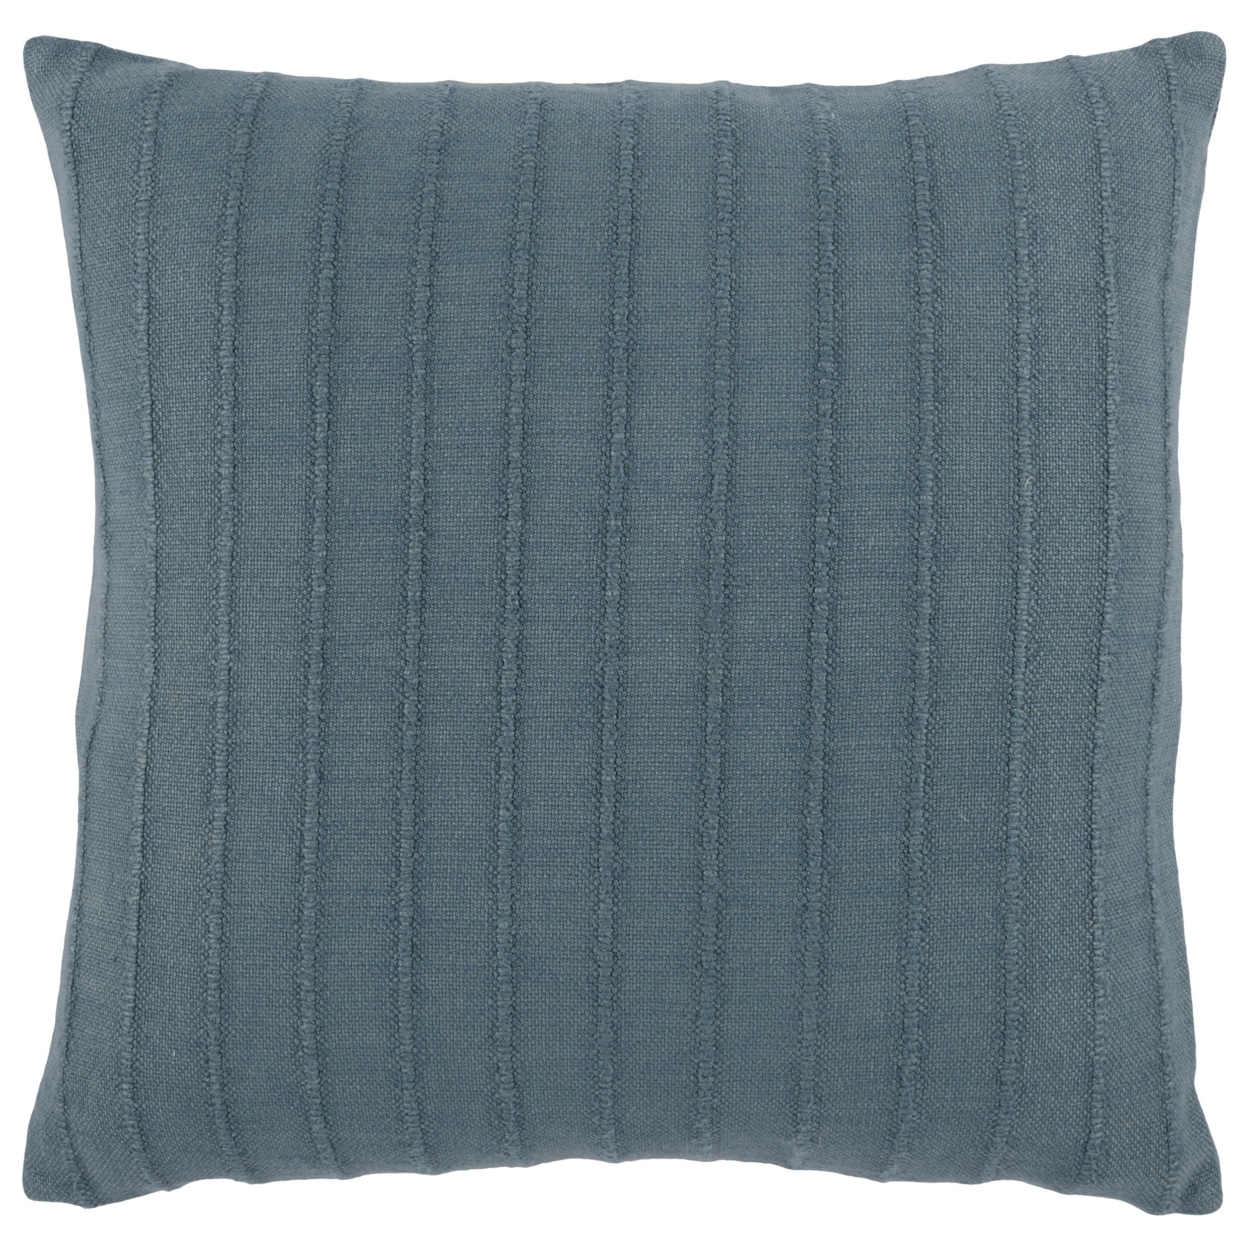 Kai 22 X 22 Throw Pillow, Woven Stripes, Cotton Viscose Blend, Light Blue, Saltoro Sherpi